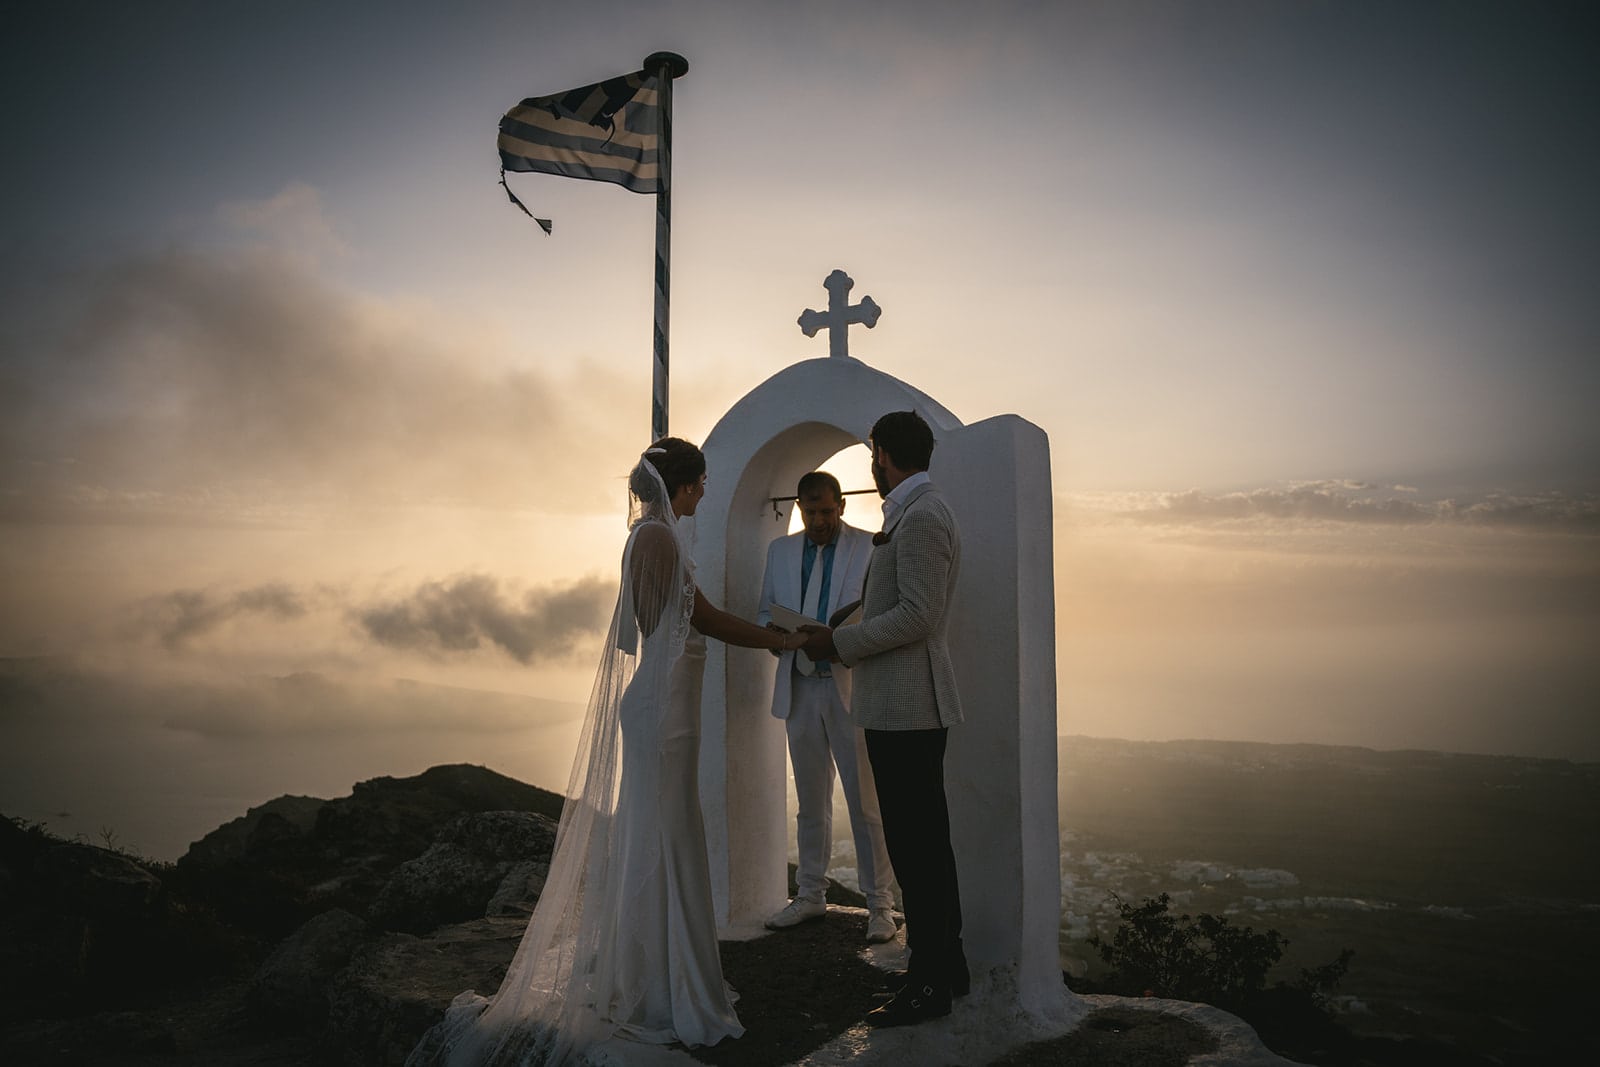 Heartfelt vows exchanged under Santorini's golden sunset, love illuminated in incredible light